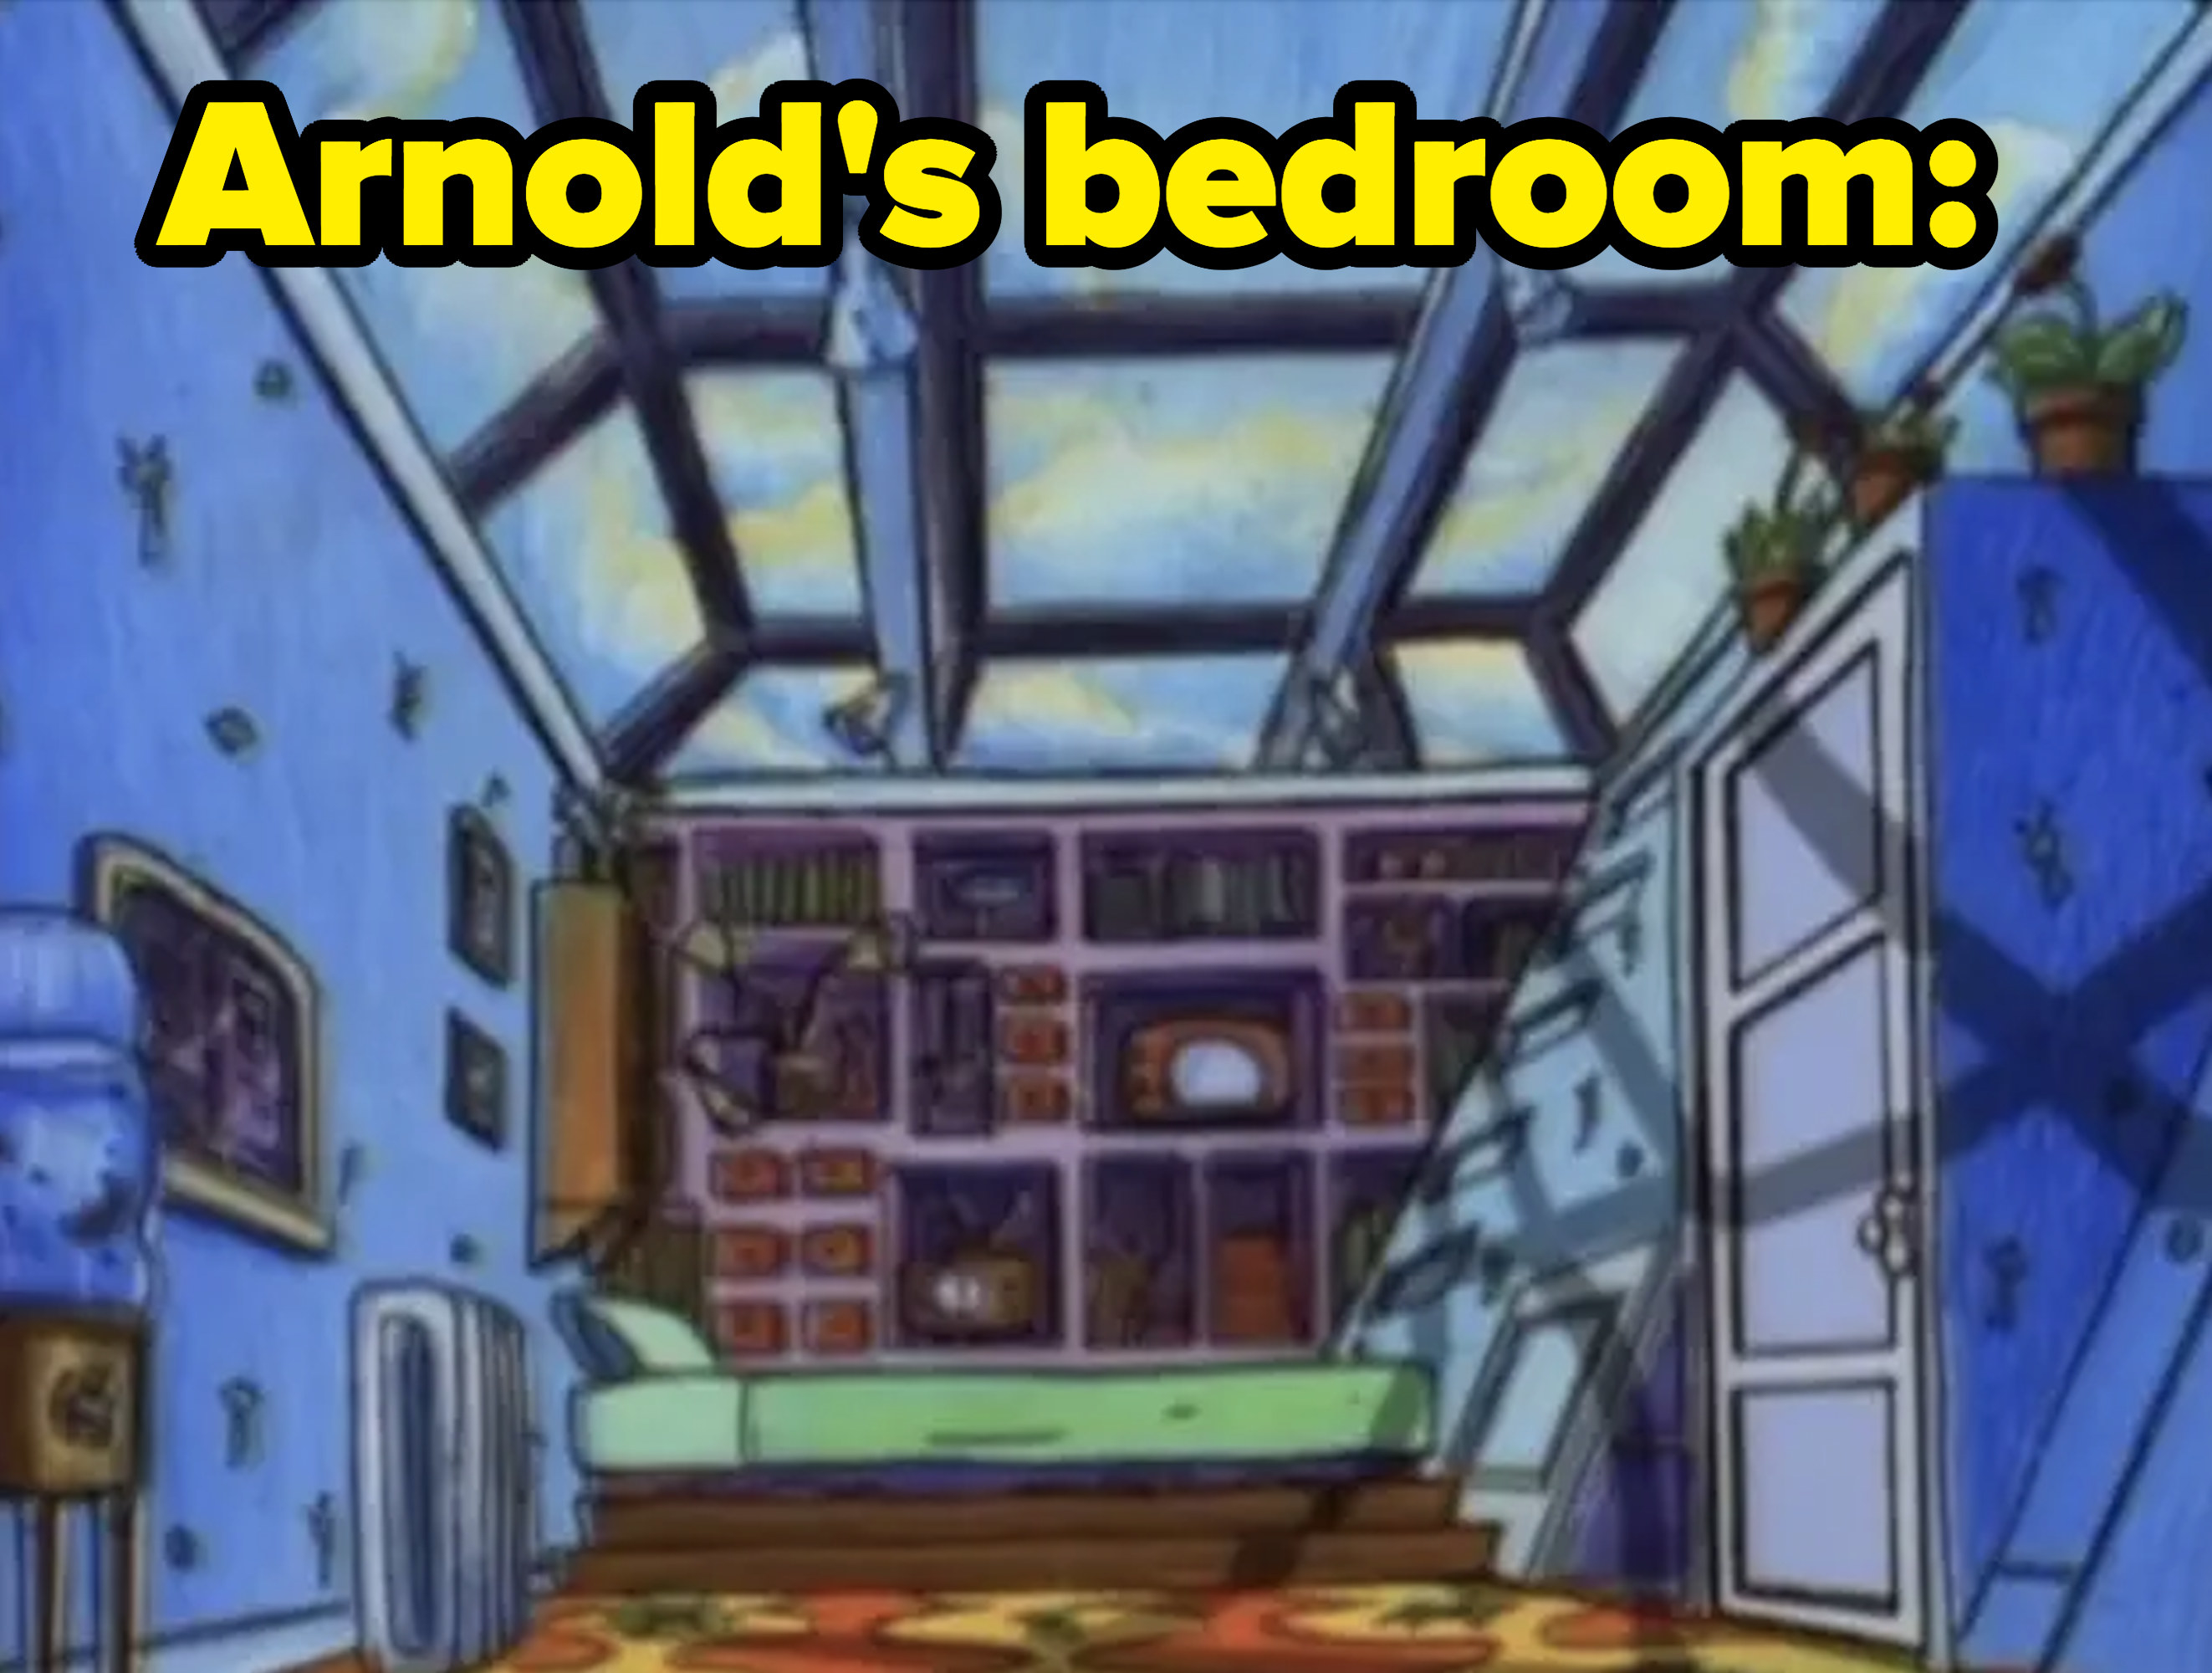 Arnold&#x27;s bedroom